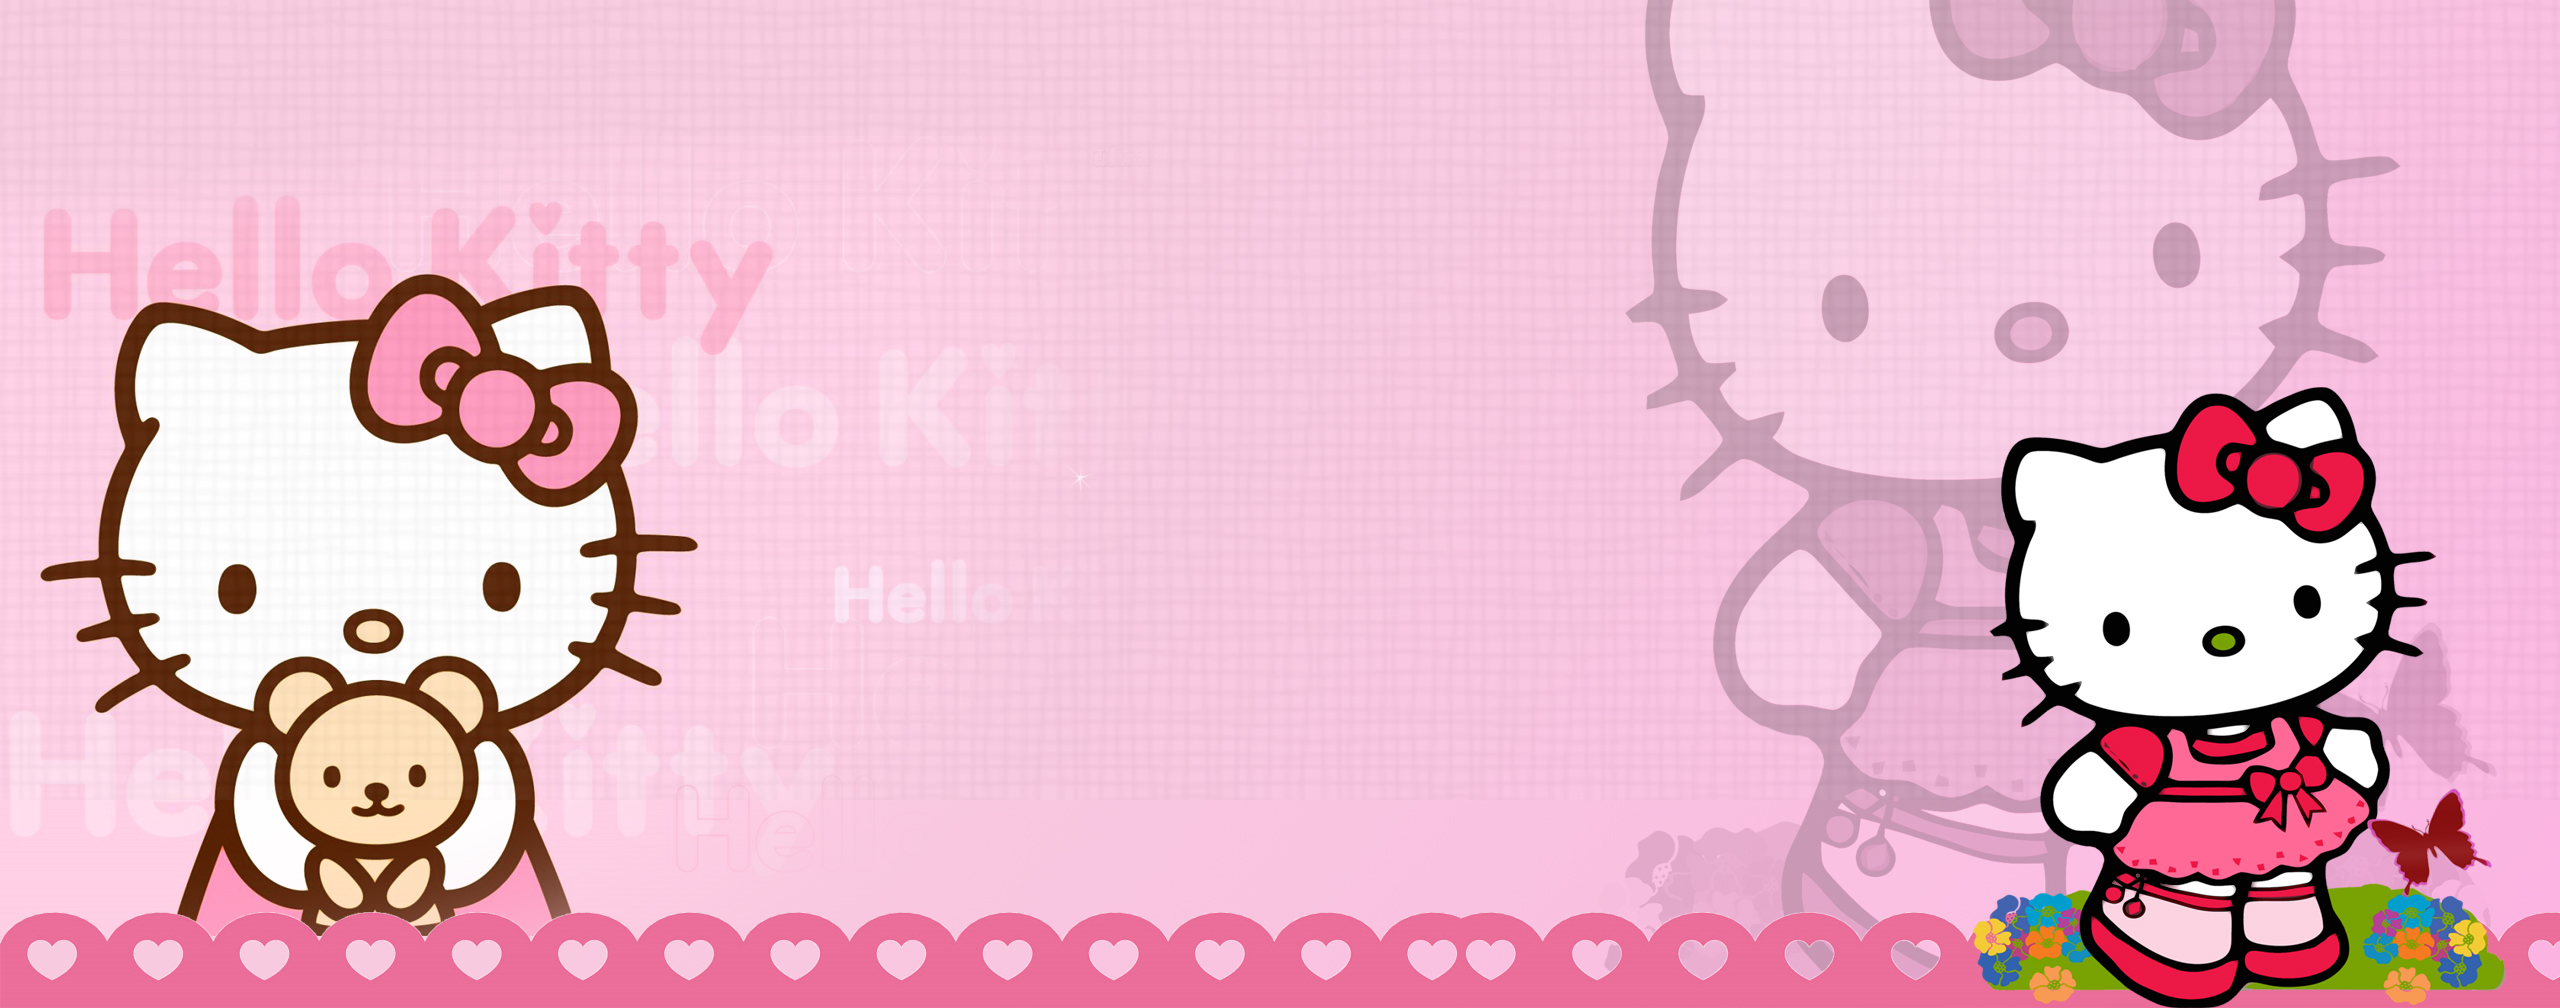 Hello Kitty Dual Monitor Wallp By Brh4j1